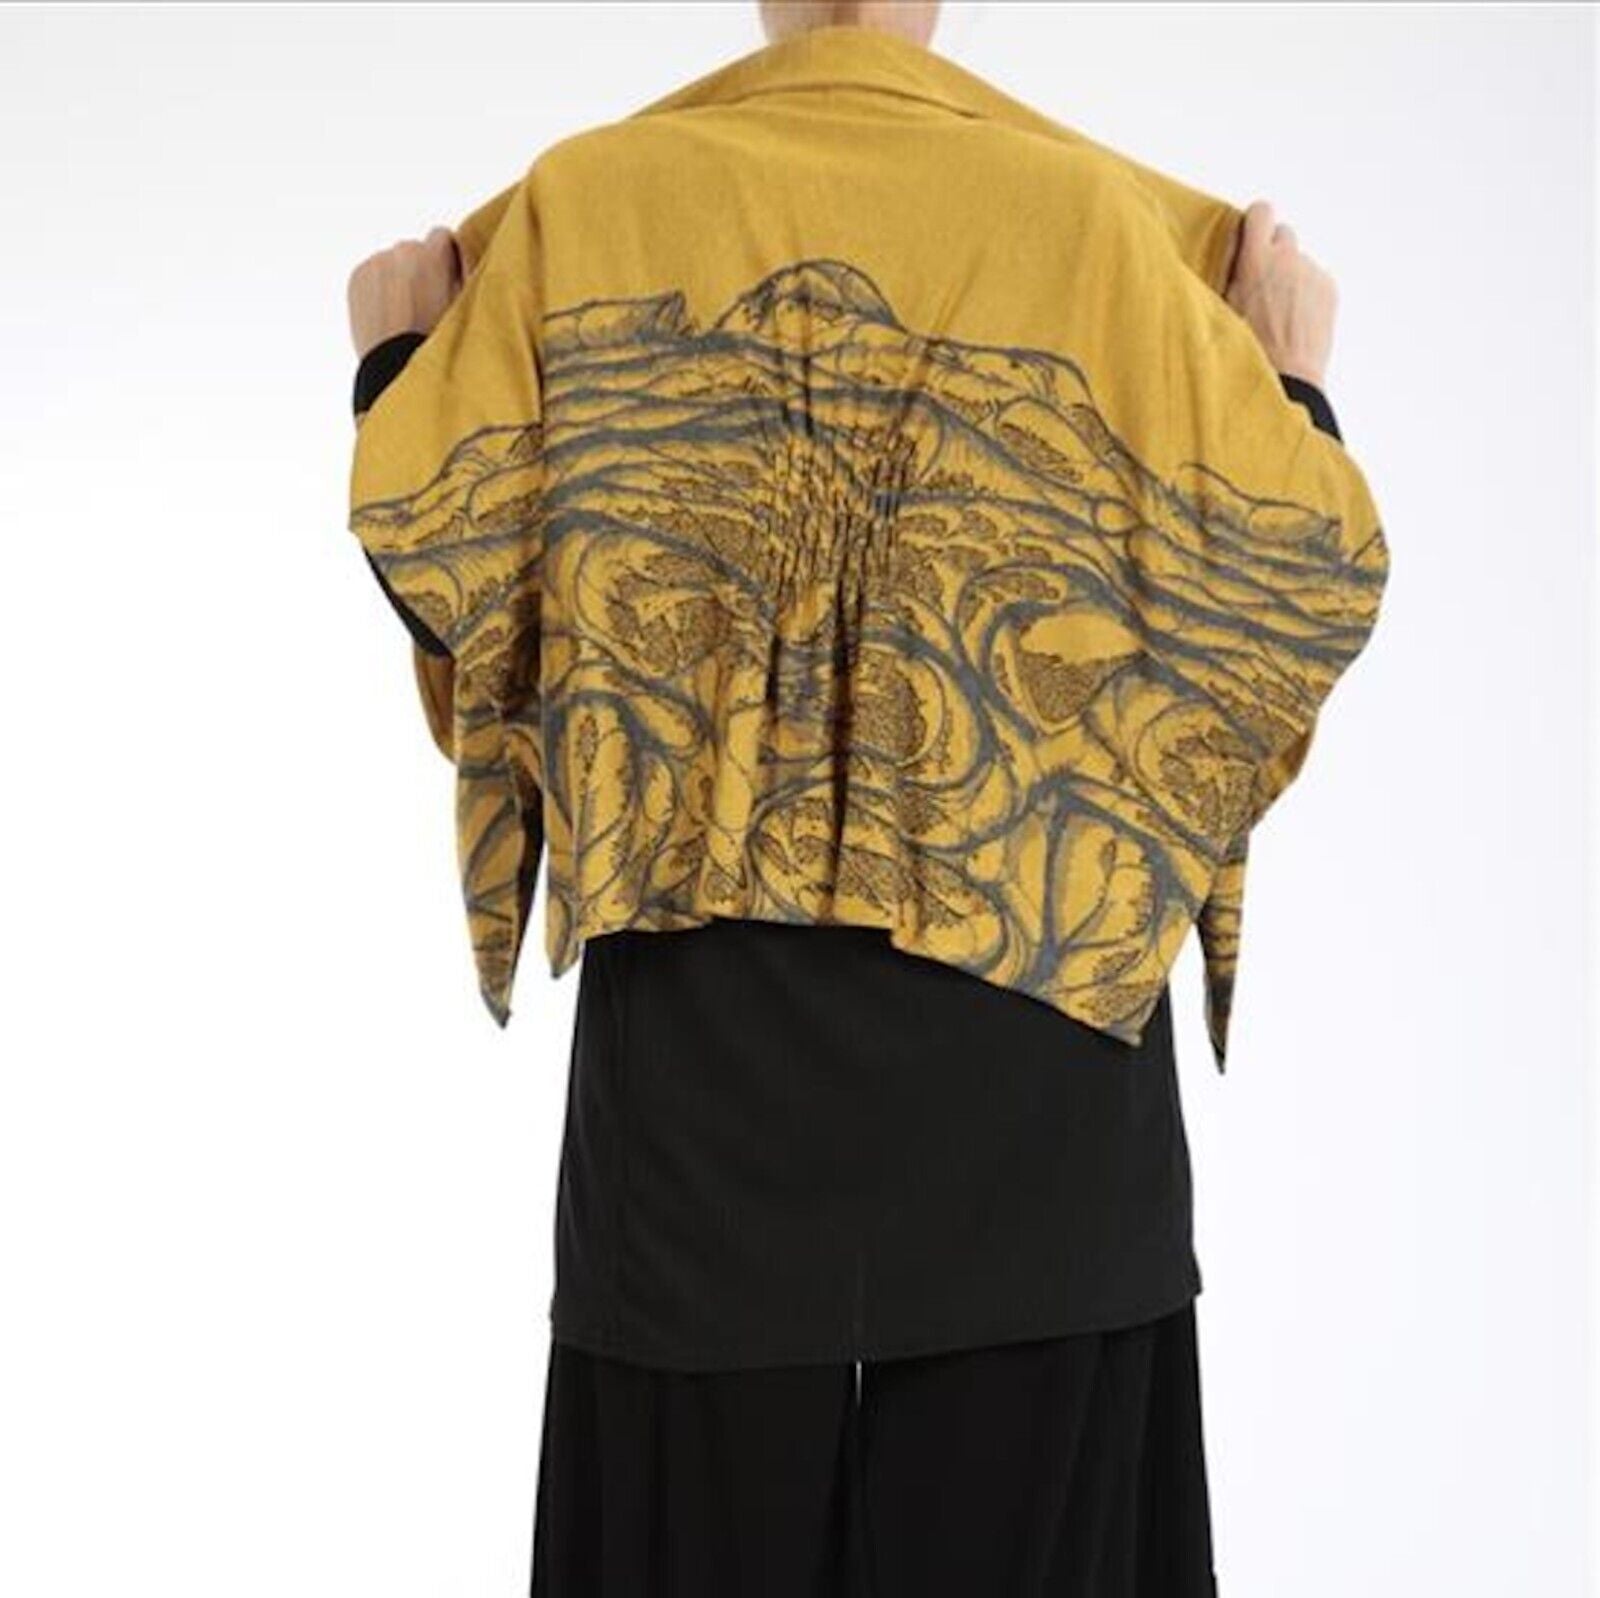 Cover UP-Femme - Damen Jacke - Stylisch warmes Material - 44 - 54 - Lagenlook